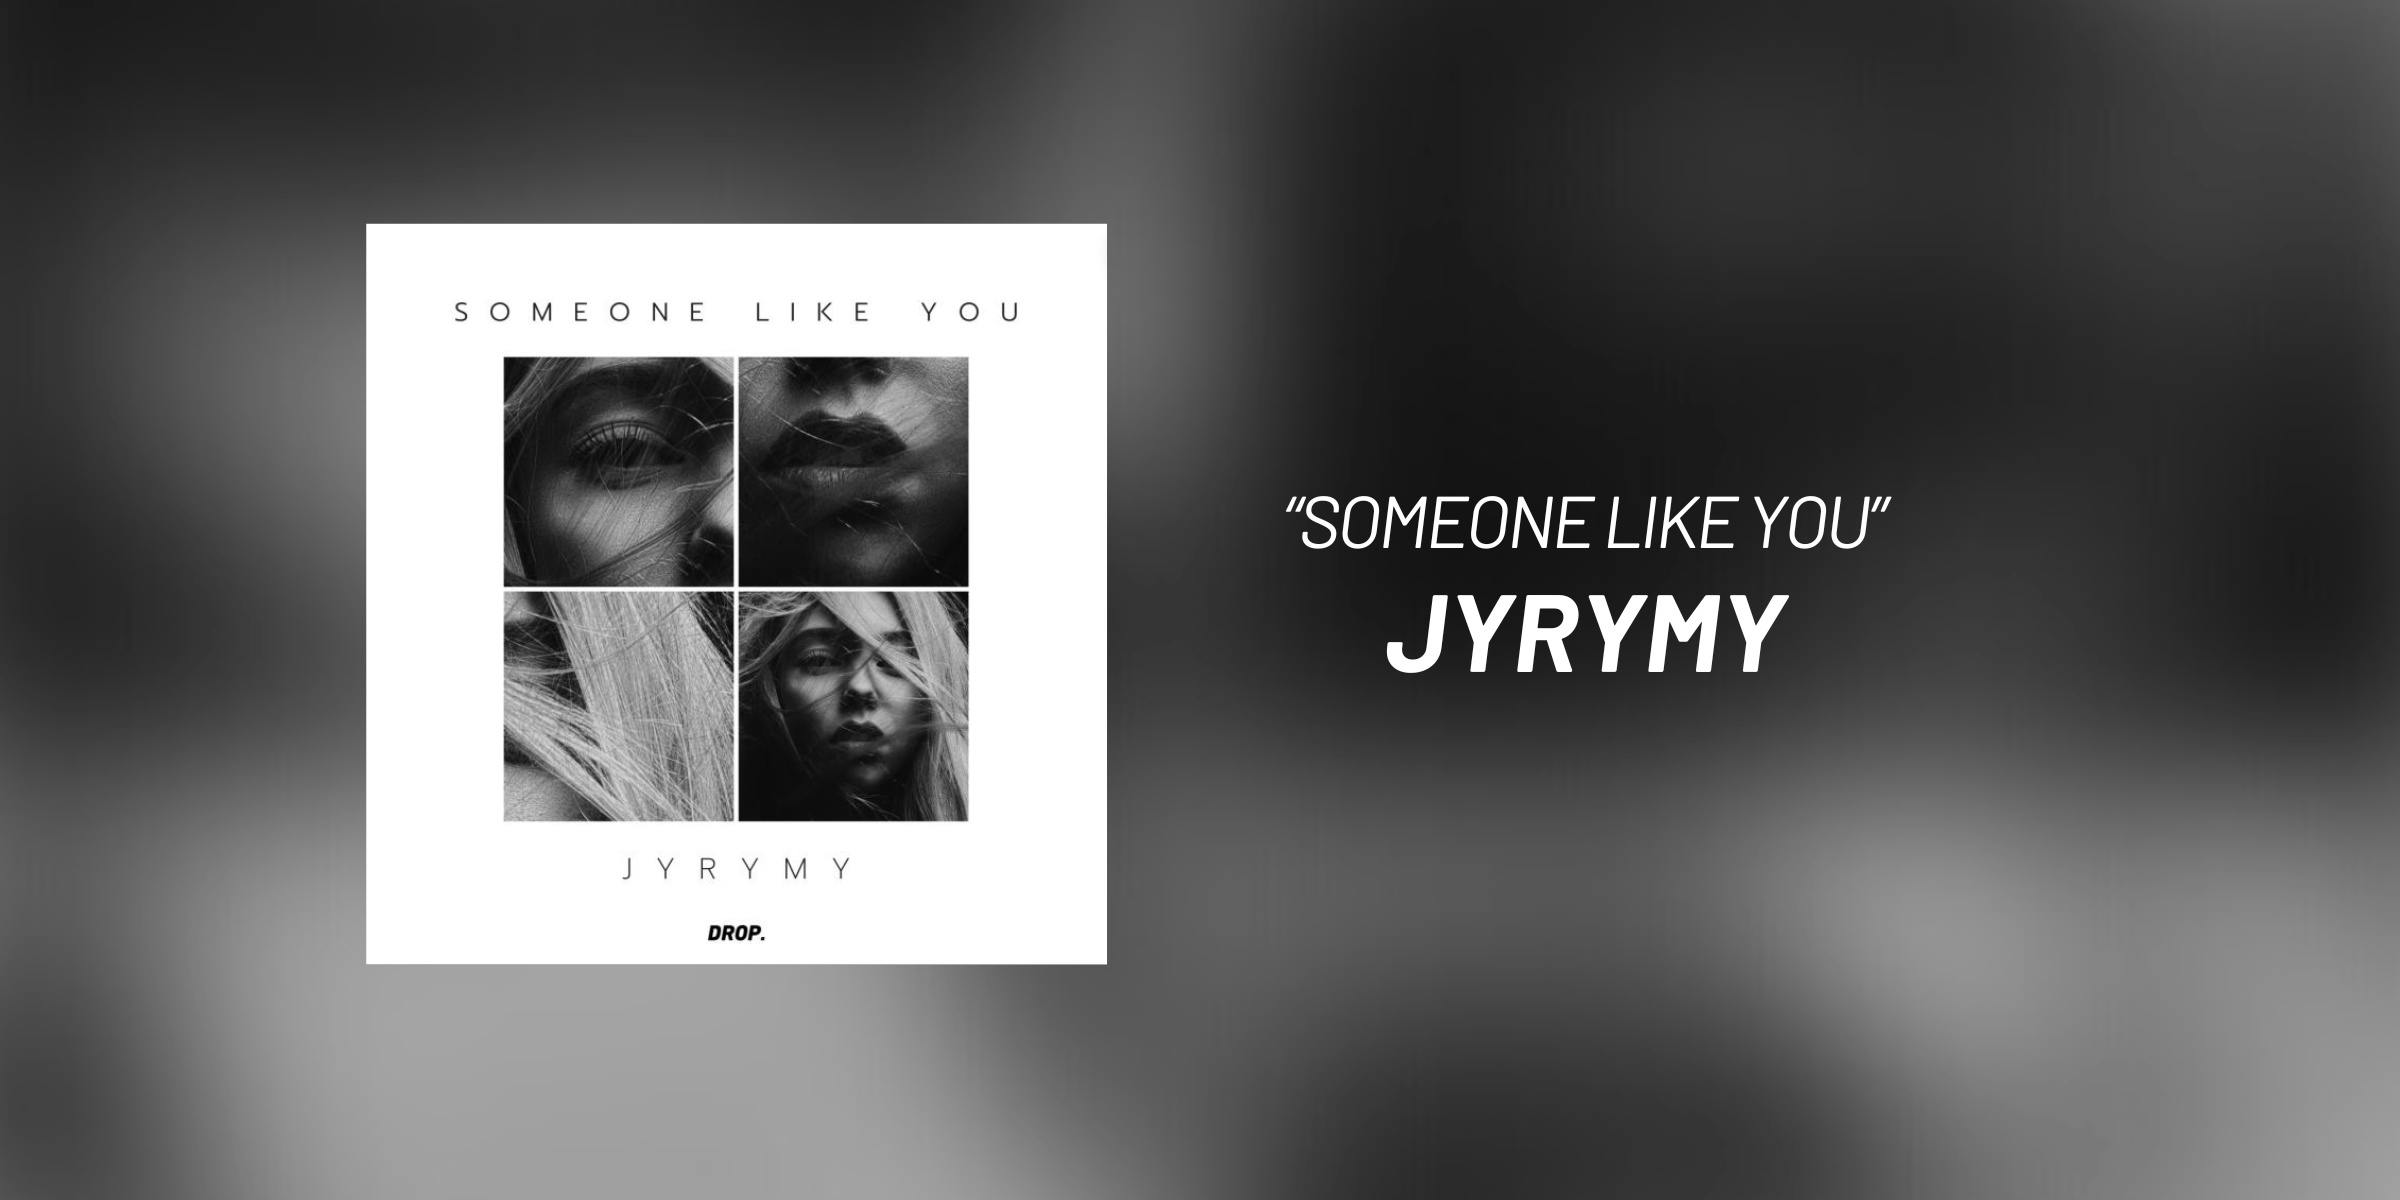 JYRYMY Goes Hard On 'Someone Like You'